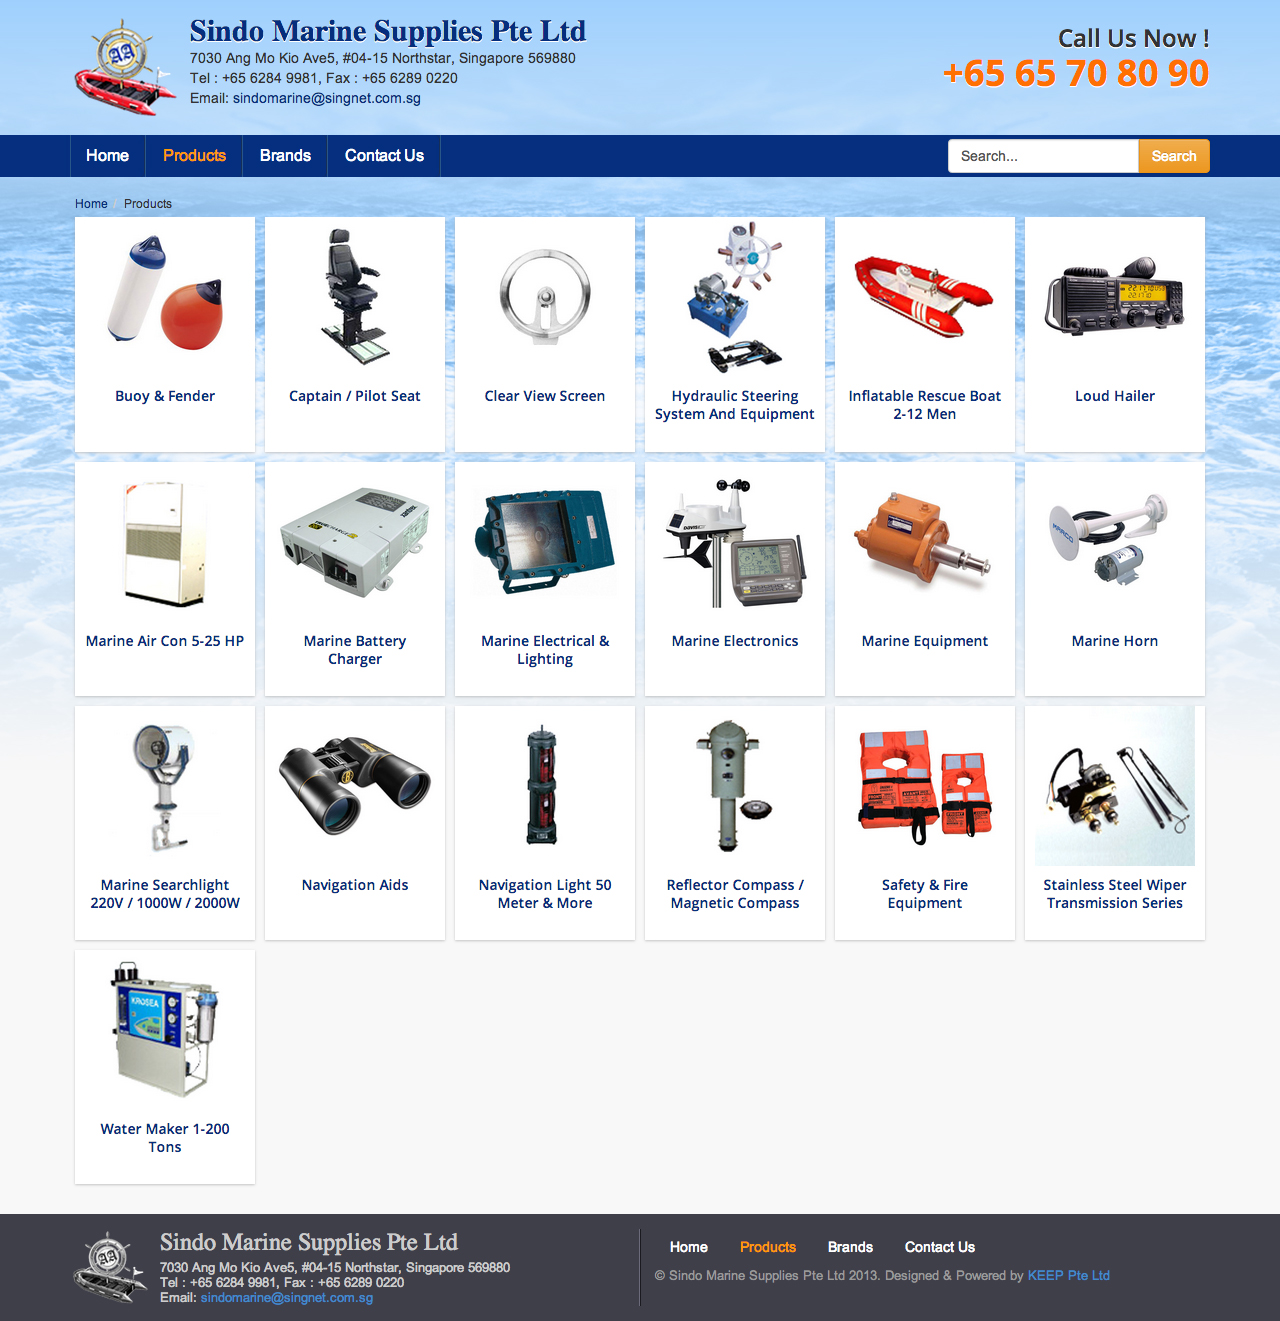 Sindo Marine Supplies Pte Ltd website products page